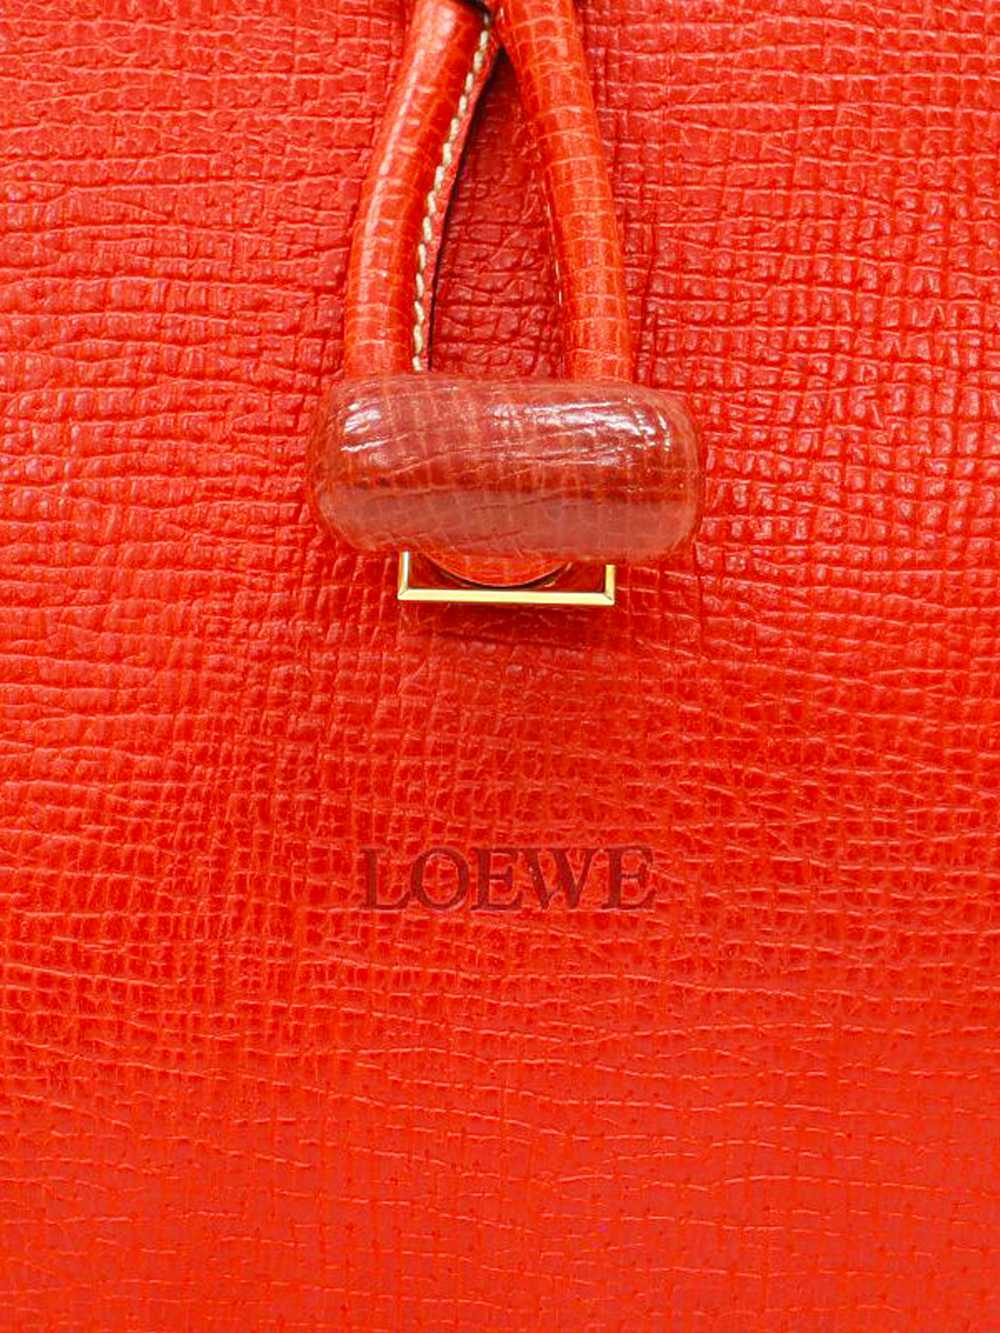 Loewe 2010s Red Mini Toggle Shoulder Bag - image 4